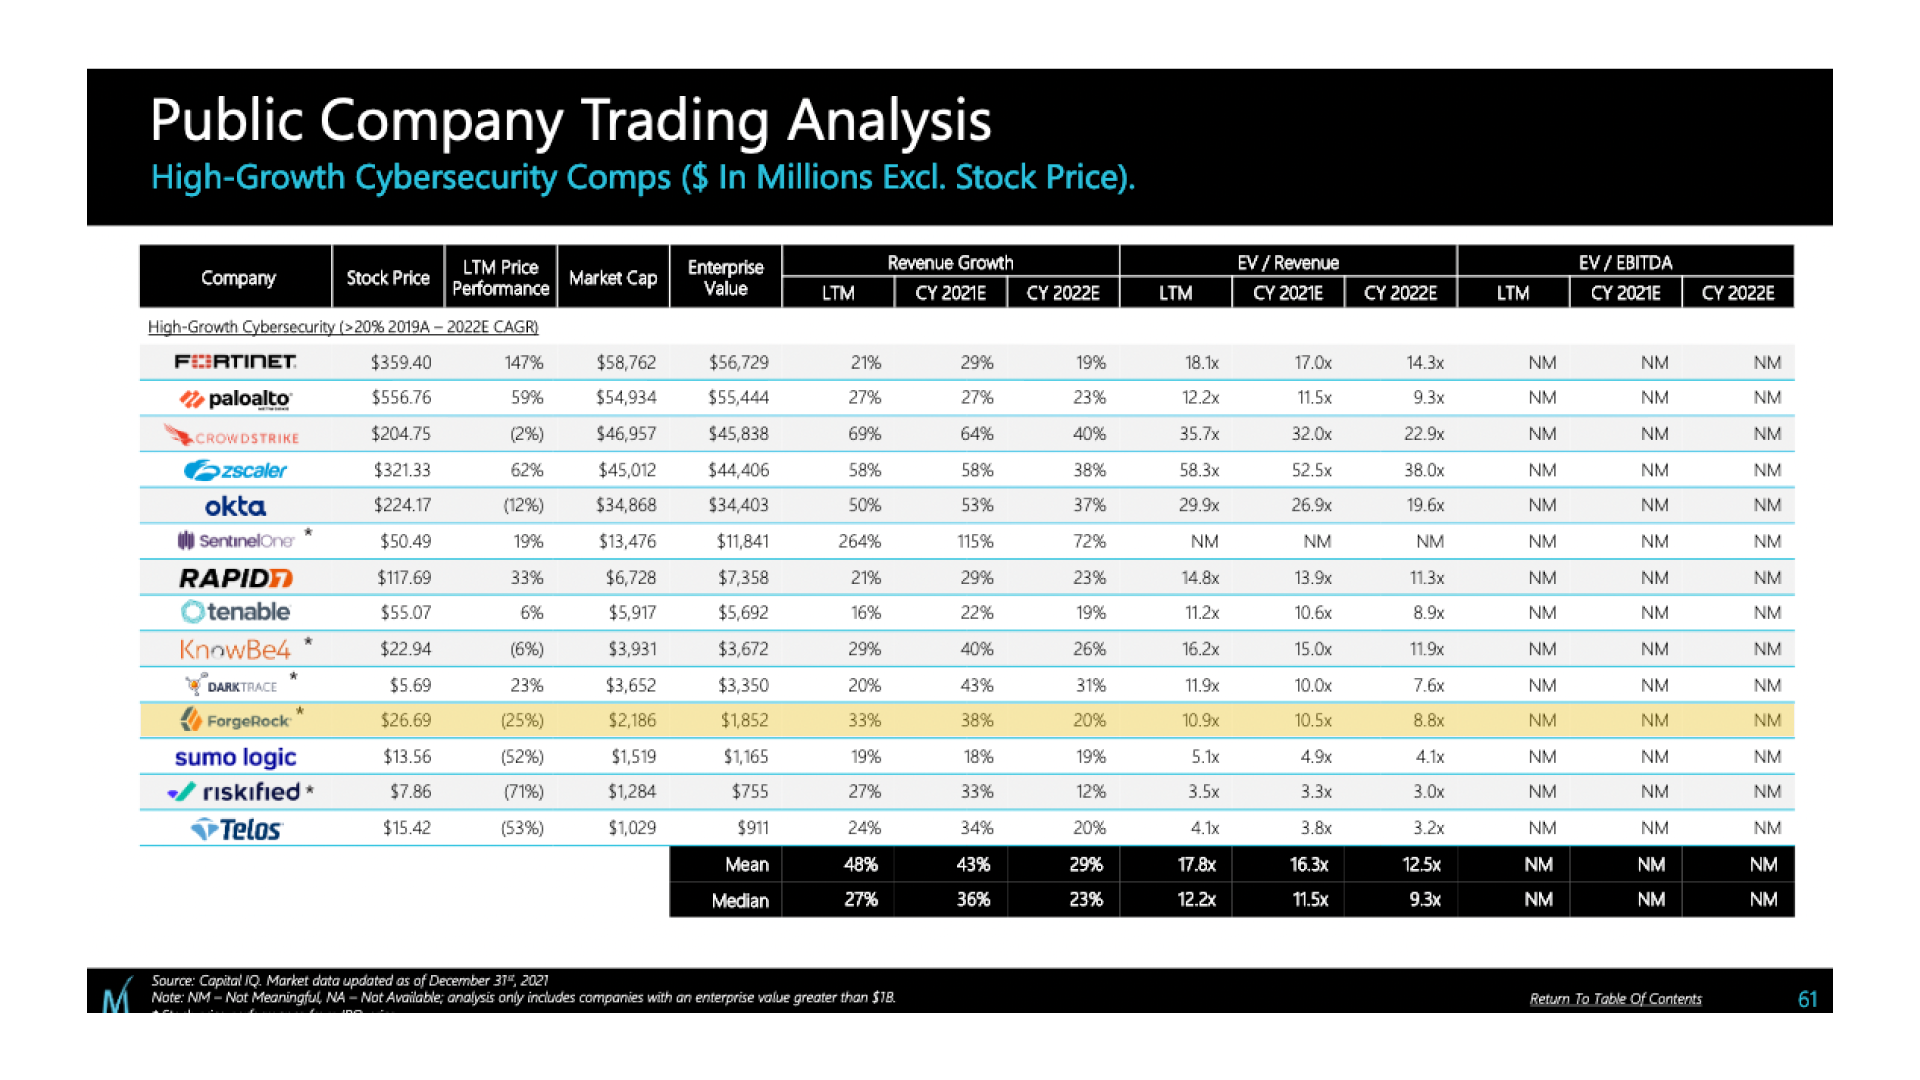 ForgeRock Public Company Trading Analysis